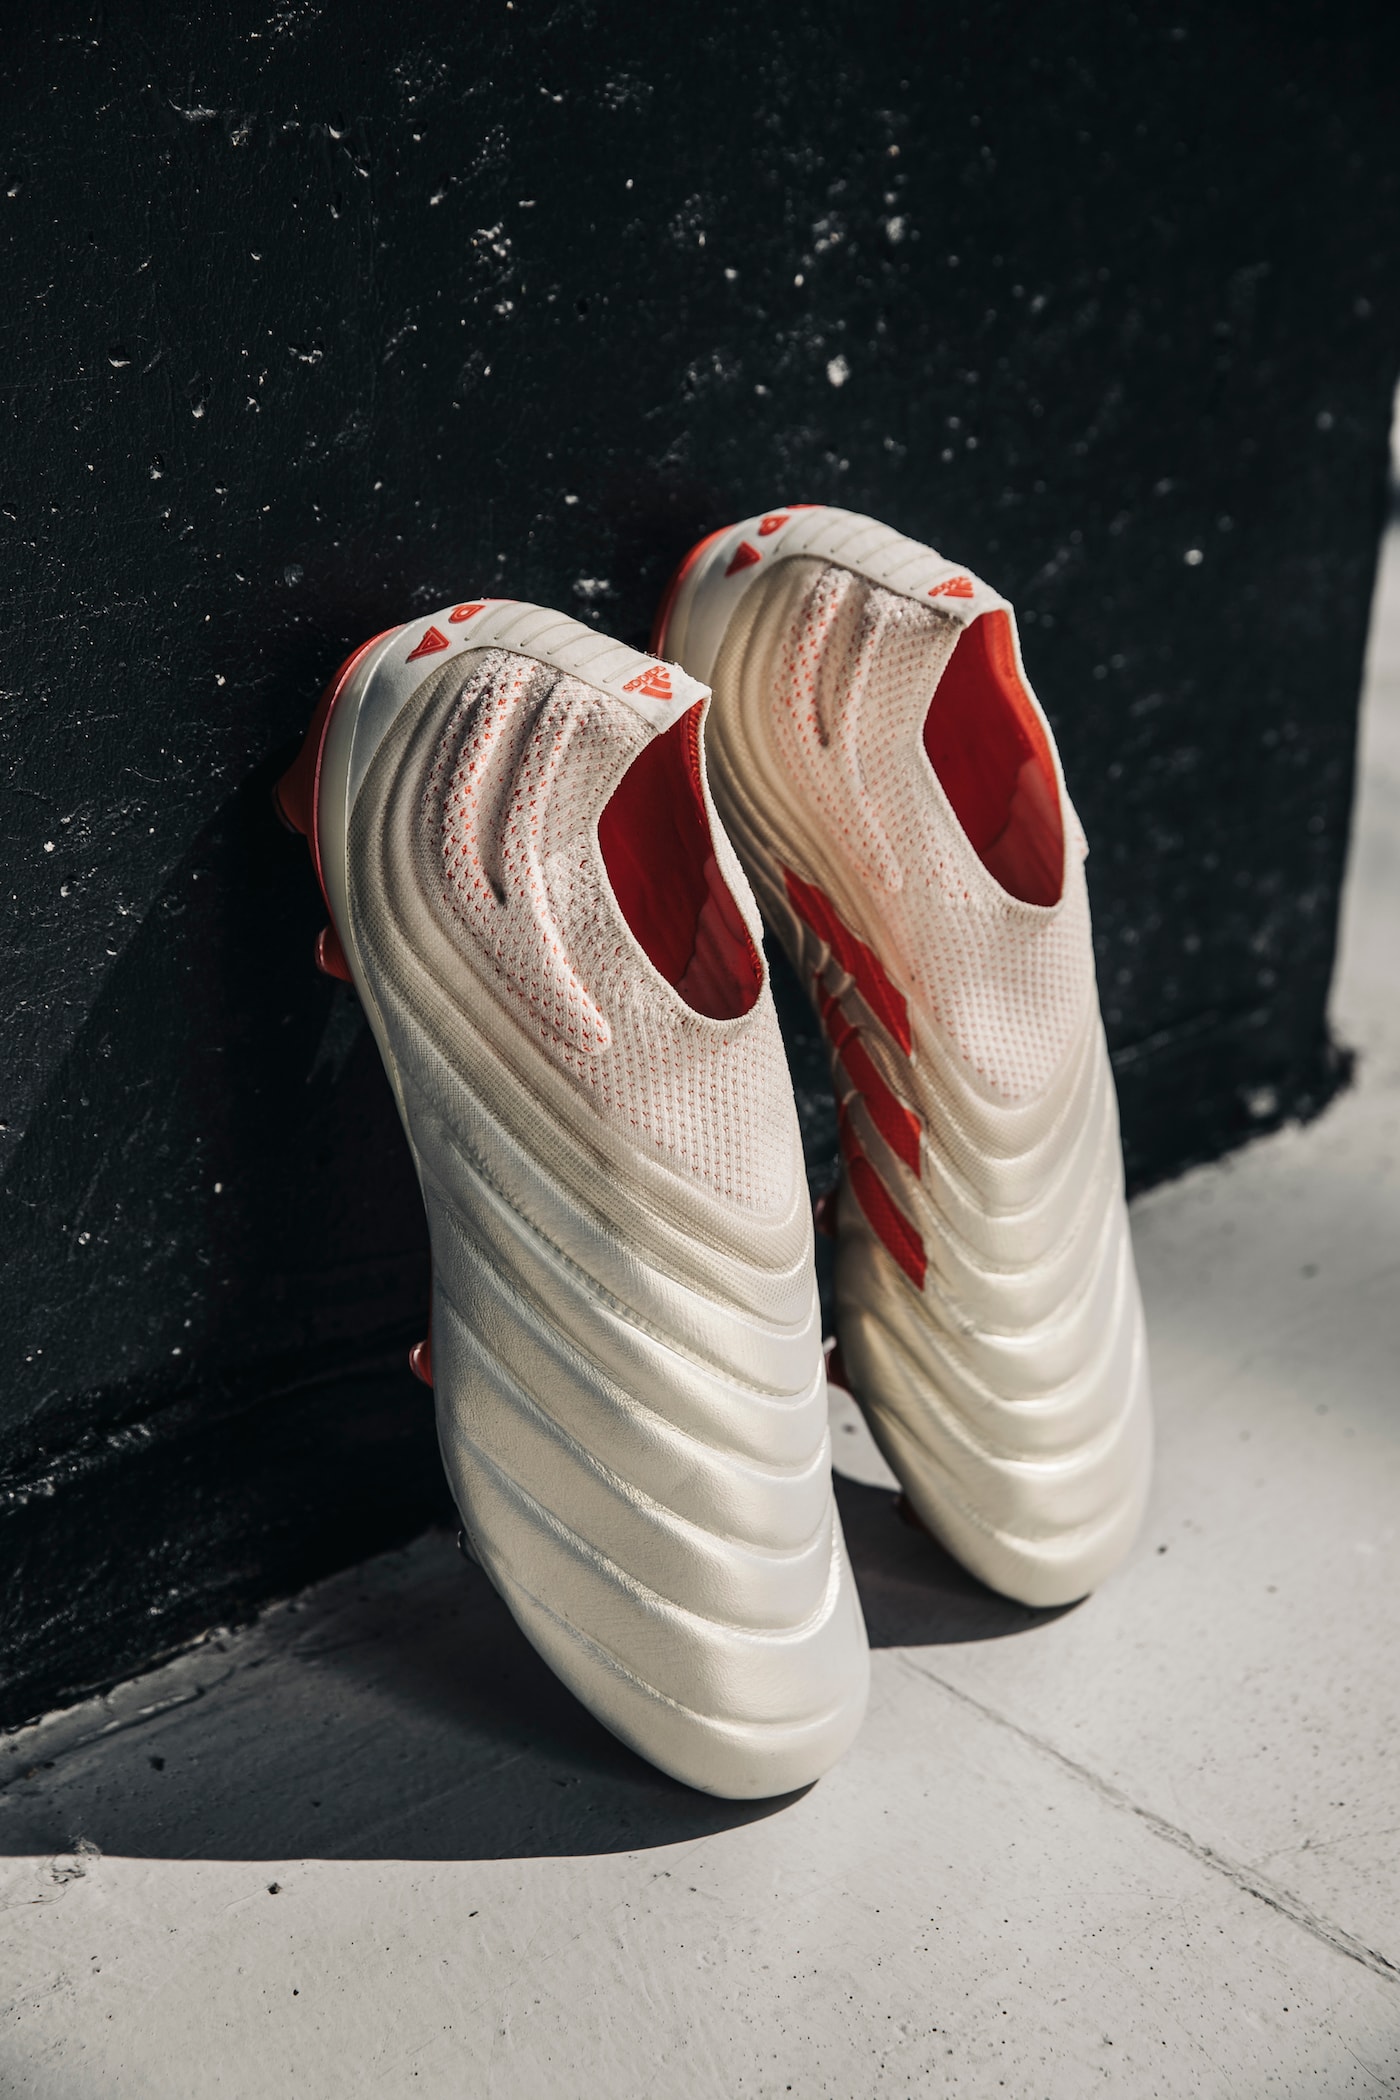 adidas 正式發佈全新 COPA 19 足球鞋